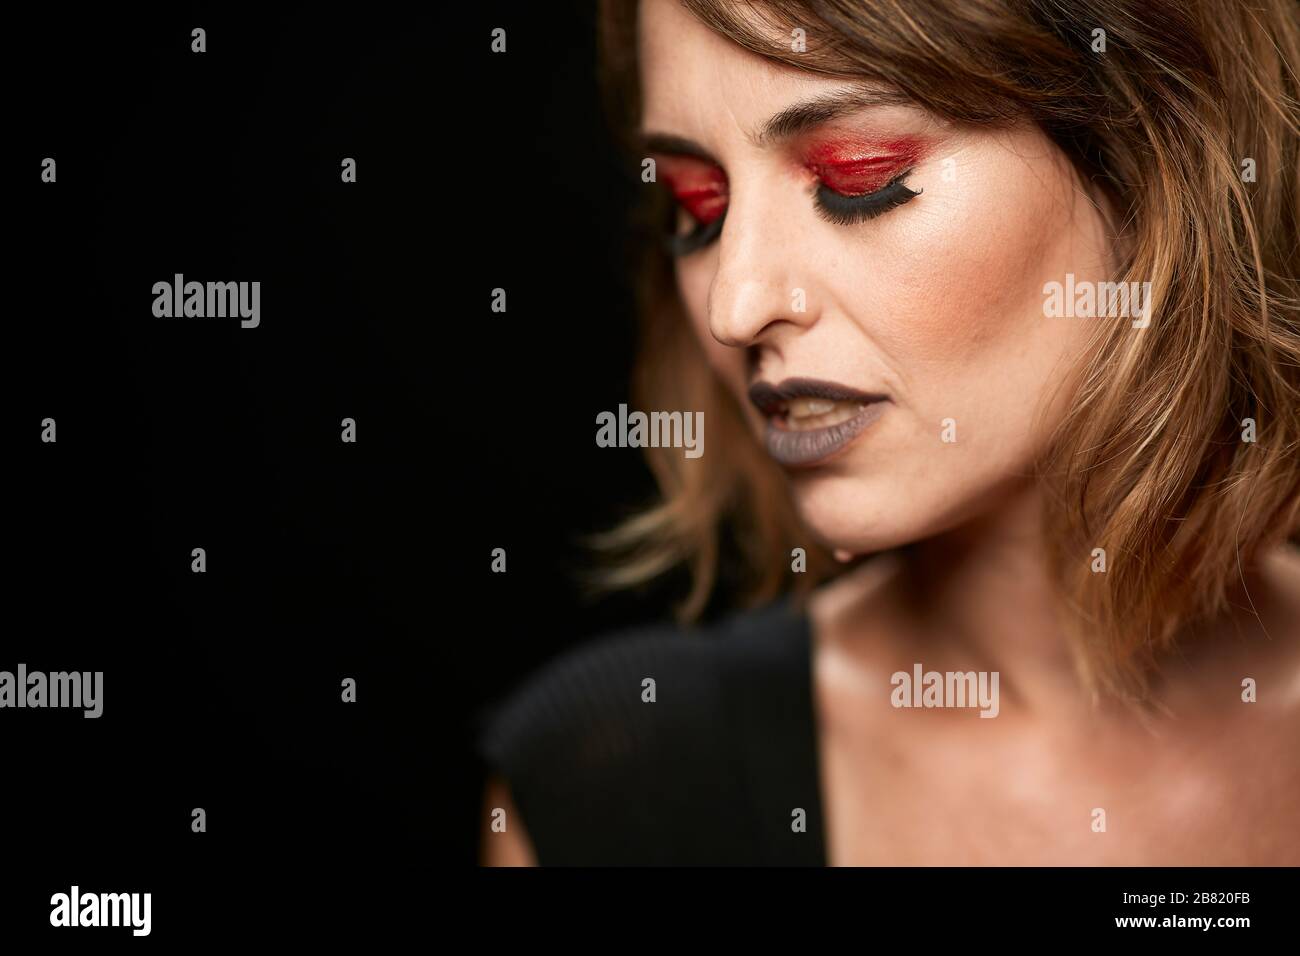 Portrait of Woman with Red Eyeshadow and False Eyelashes Stock Photo